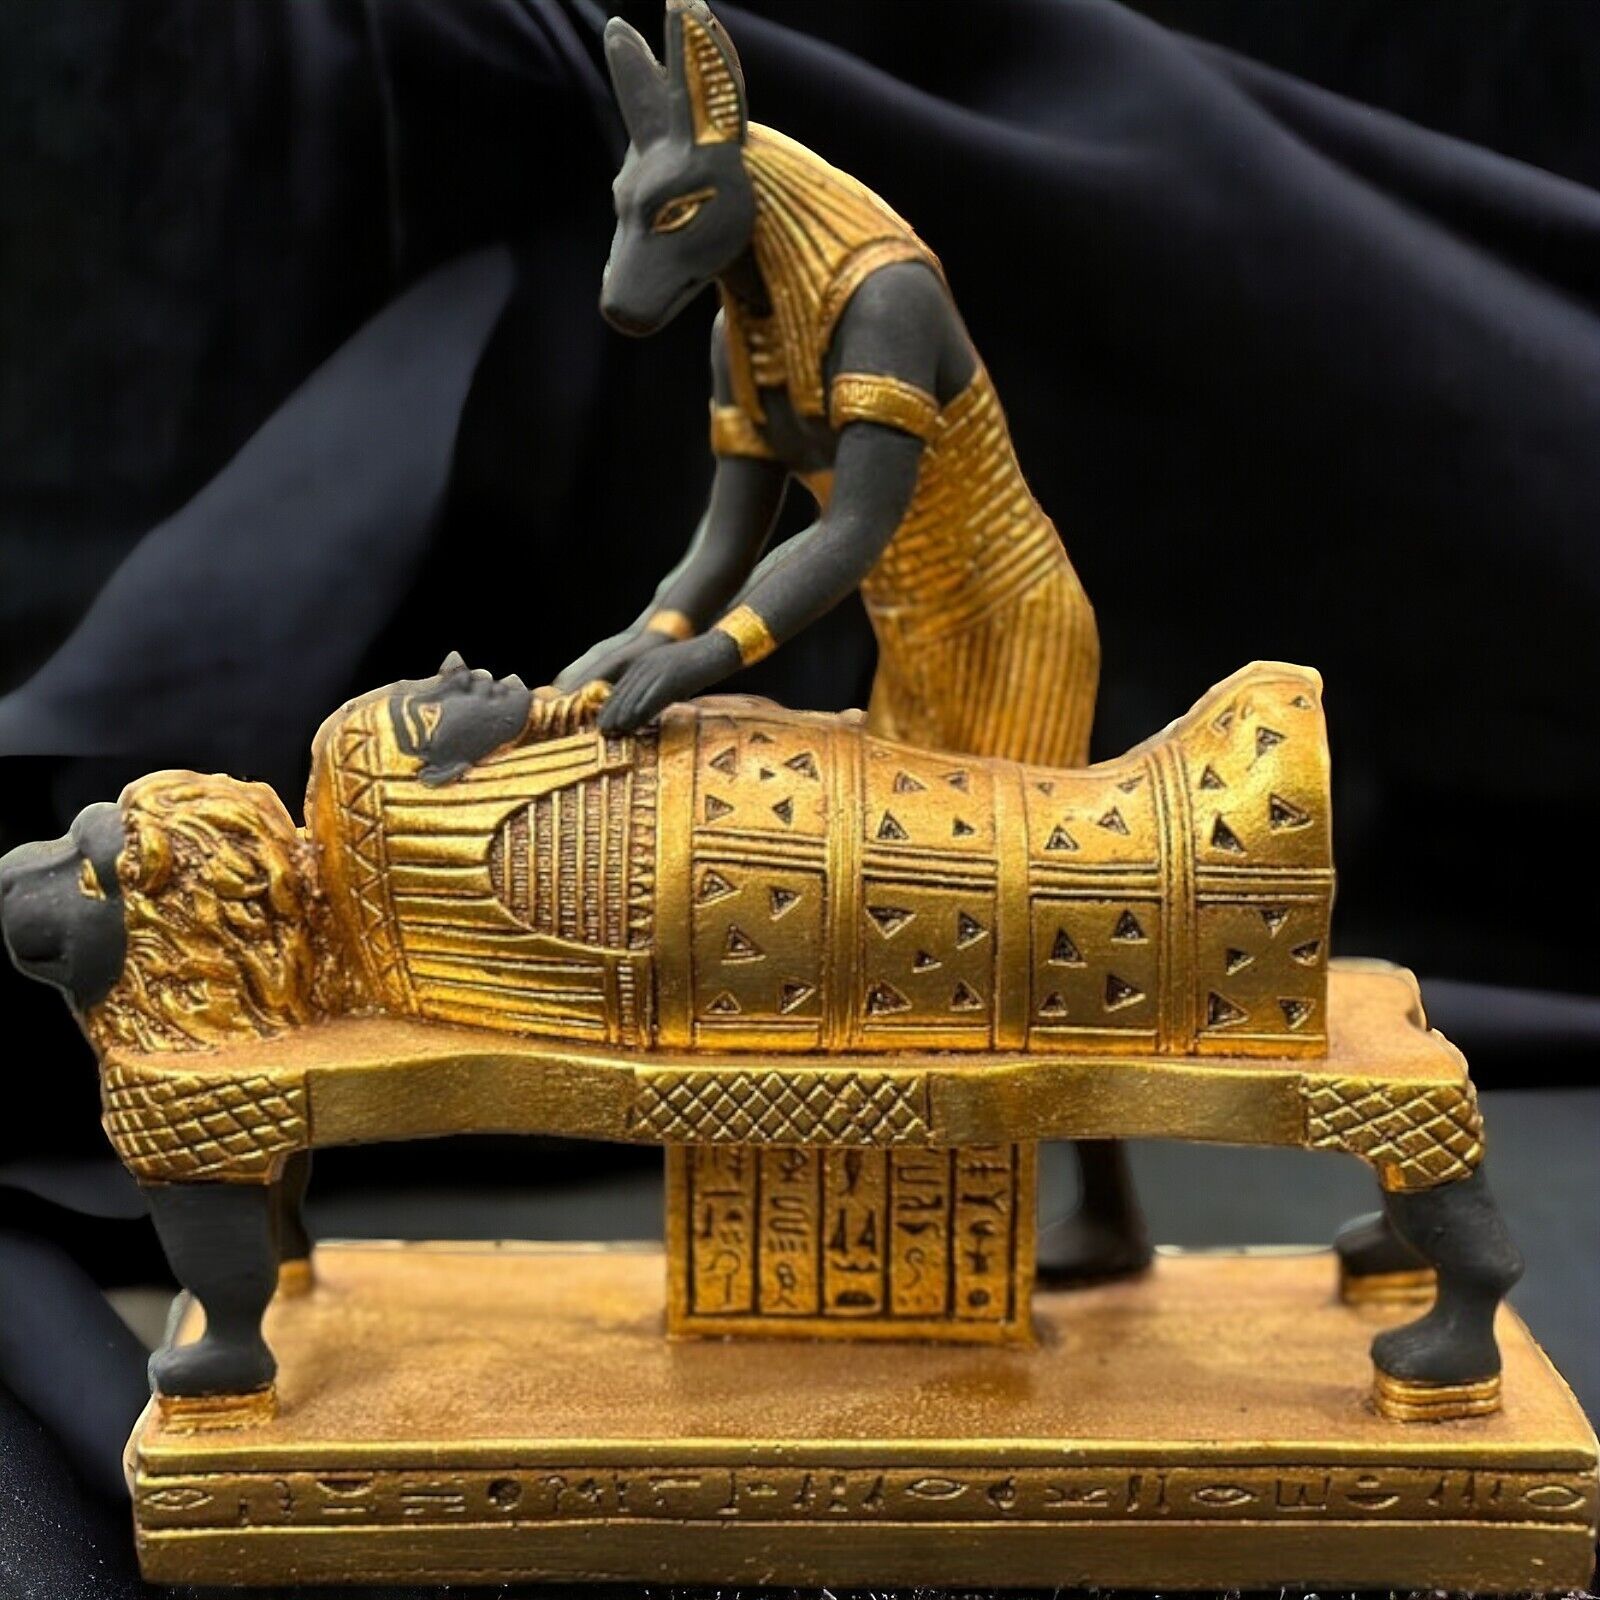 Anubis God Statue - Ancient Egyptian Deity Figurine | Finest Stone Craftsmanship